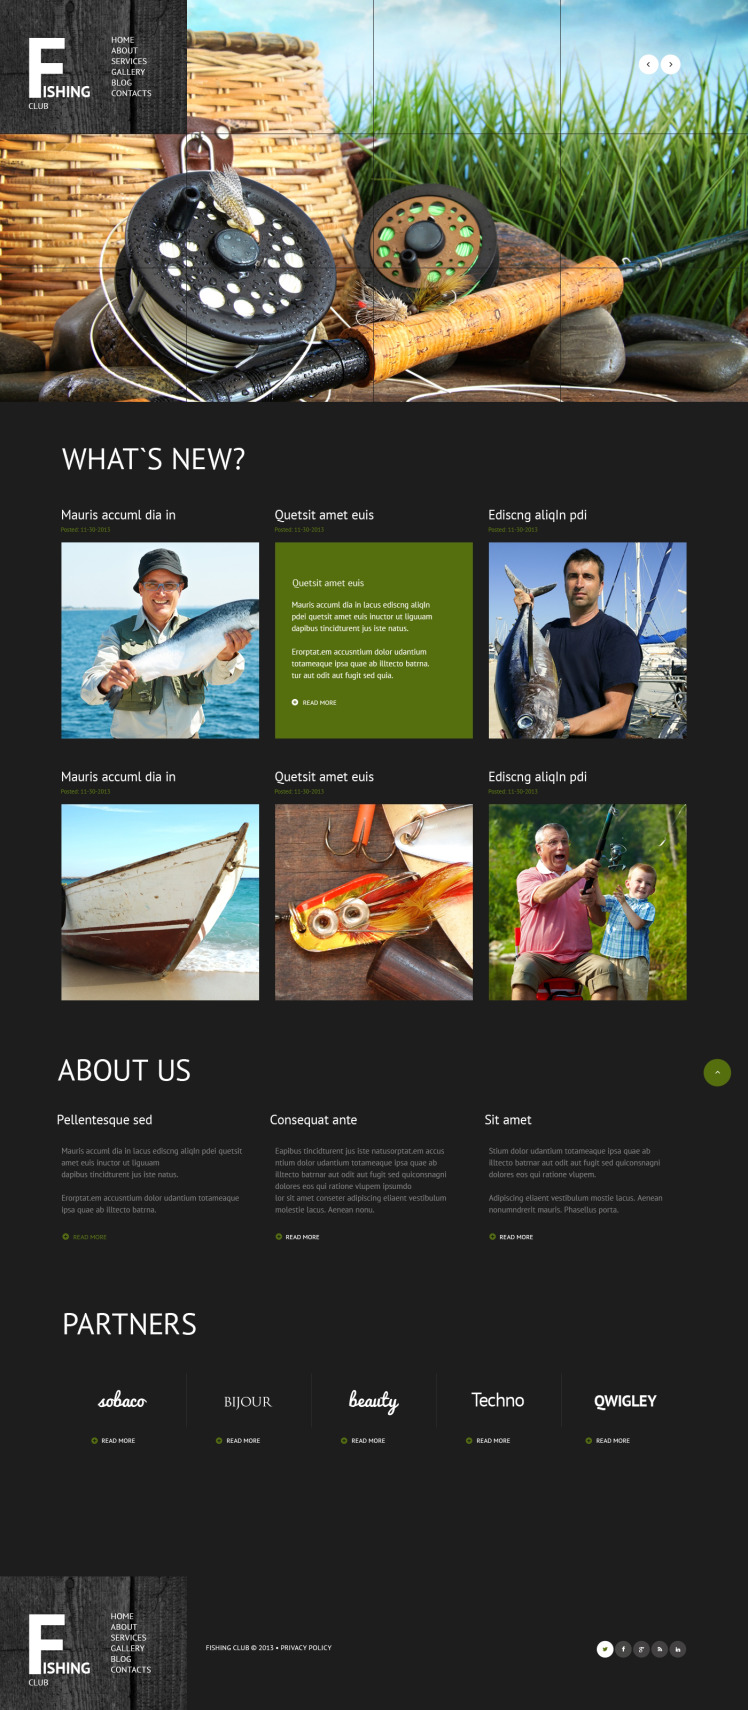 Fishing Responsive WordPress Theme